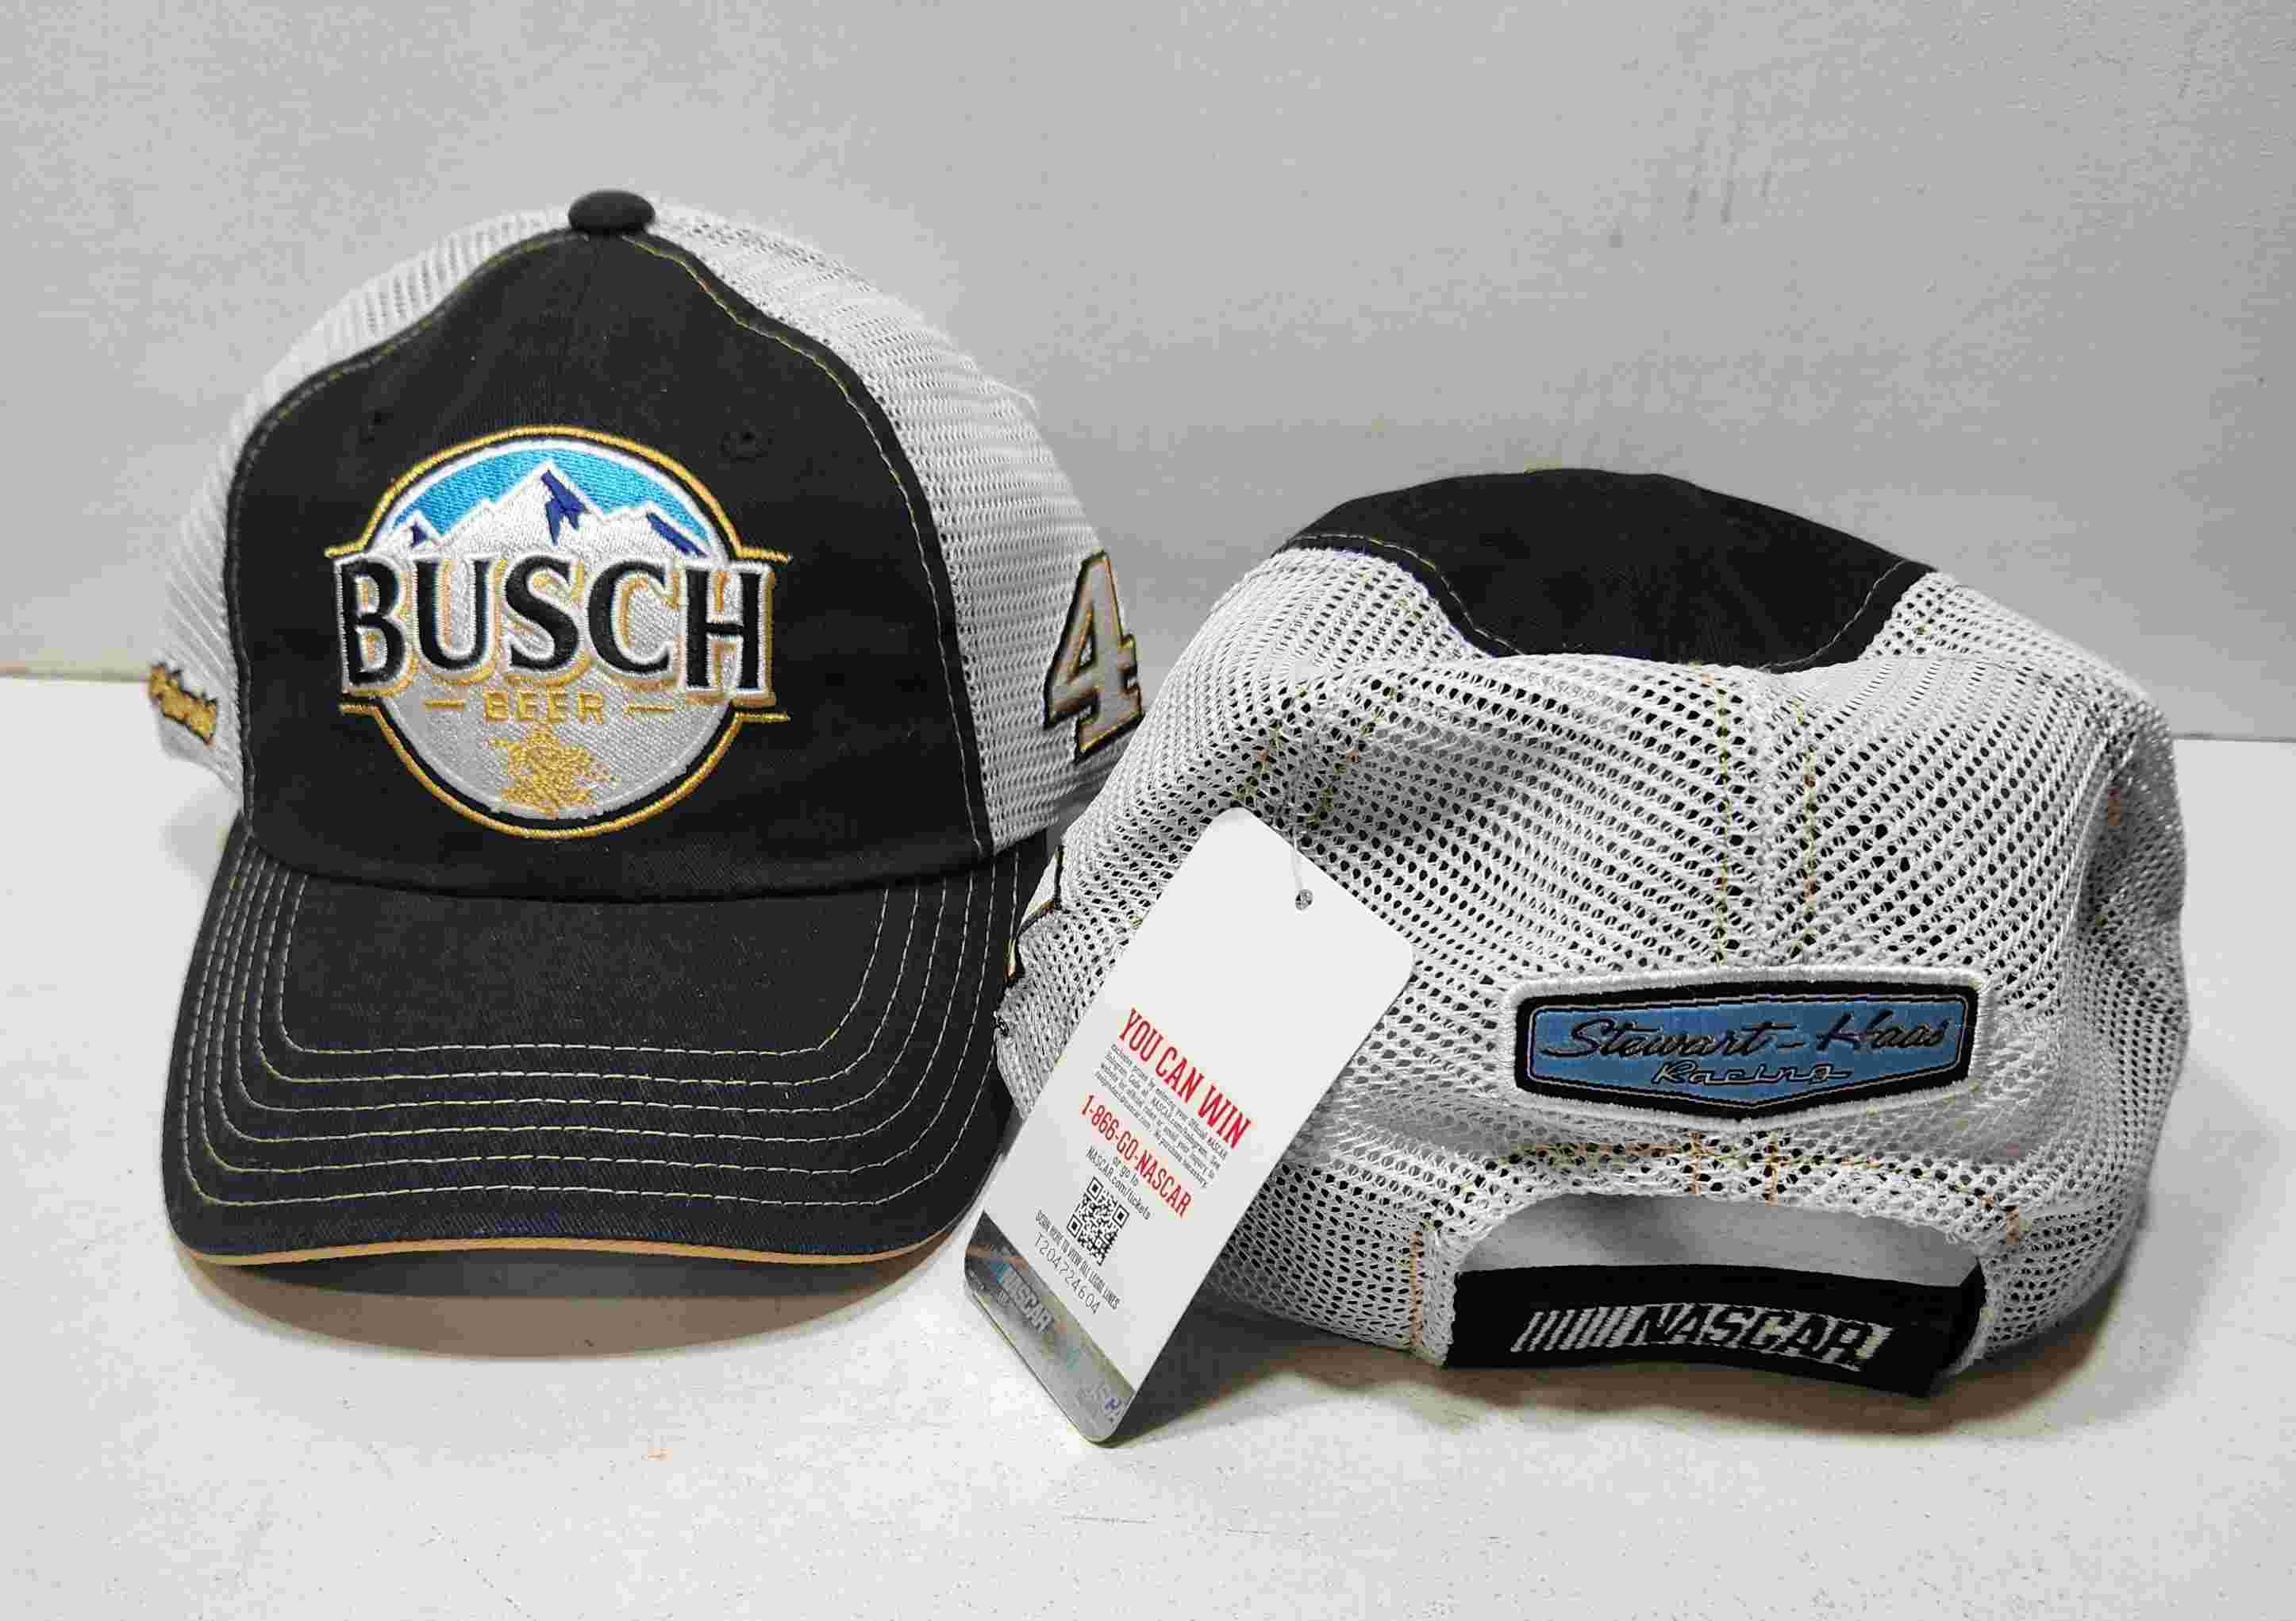 2017 Kevin Harvick Busch Beer "Trucker" mesh cap